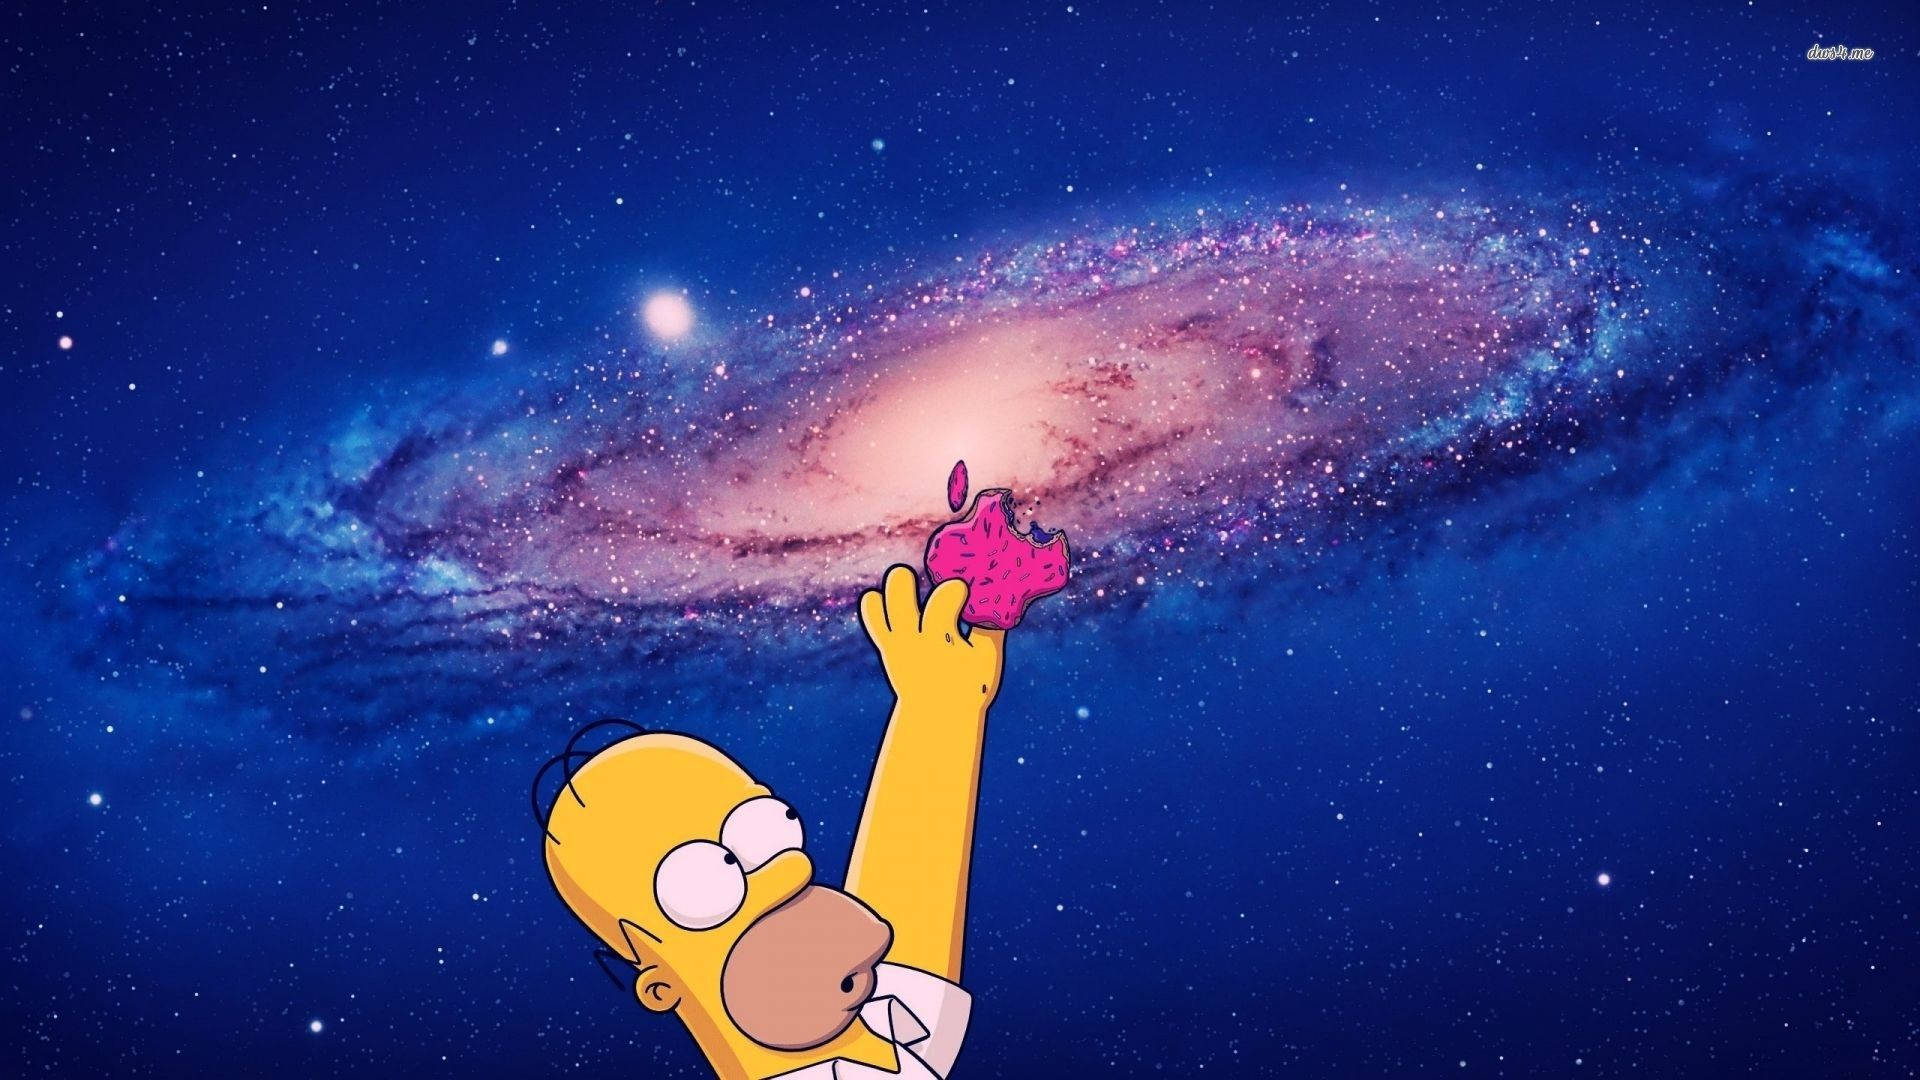 Homer Simpson - 